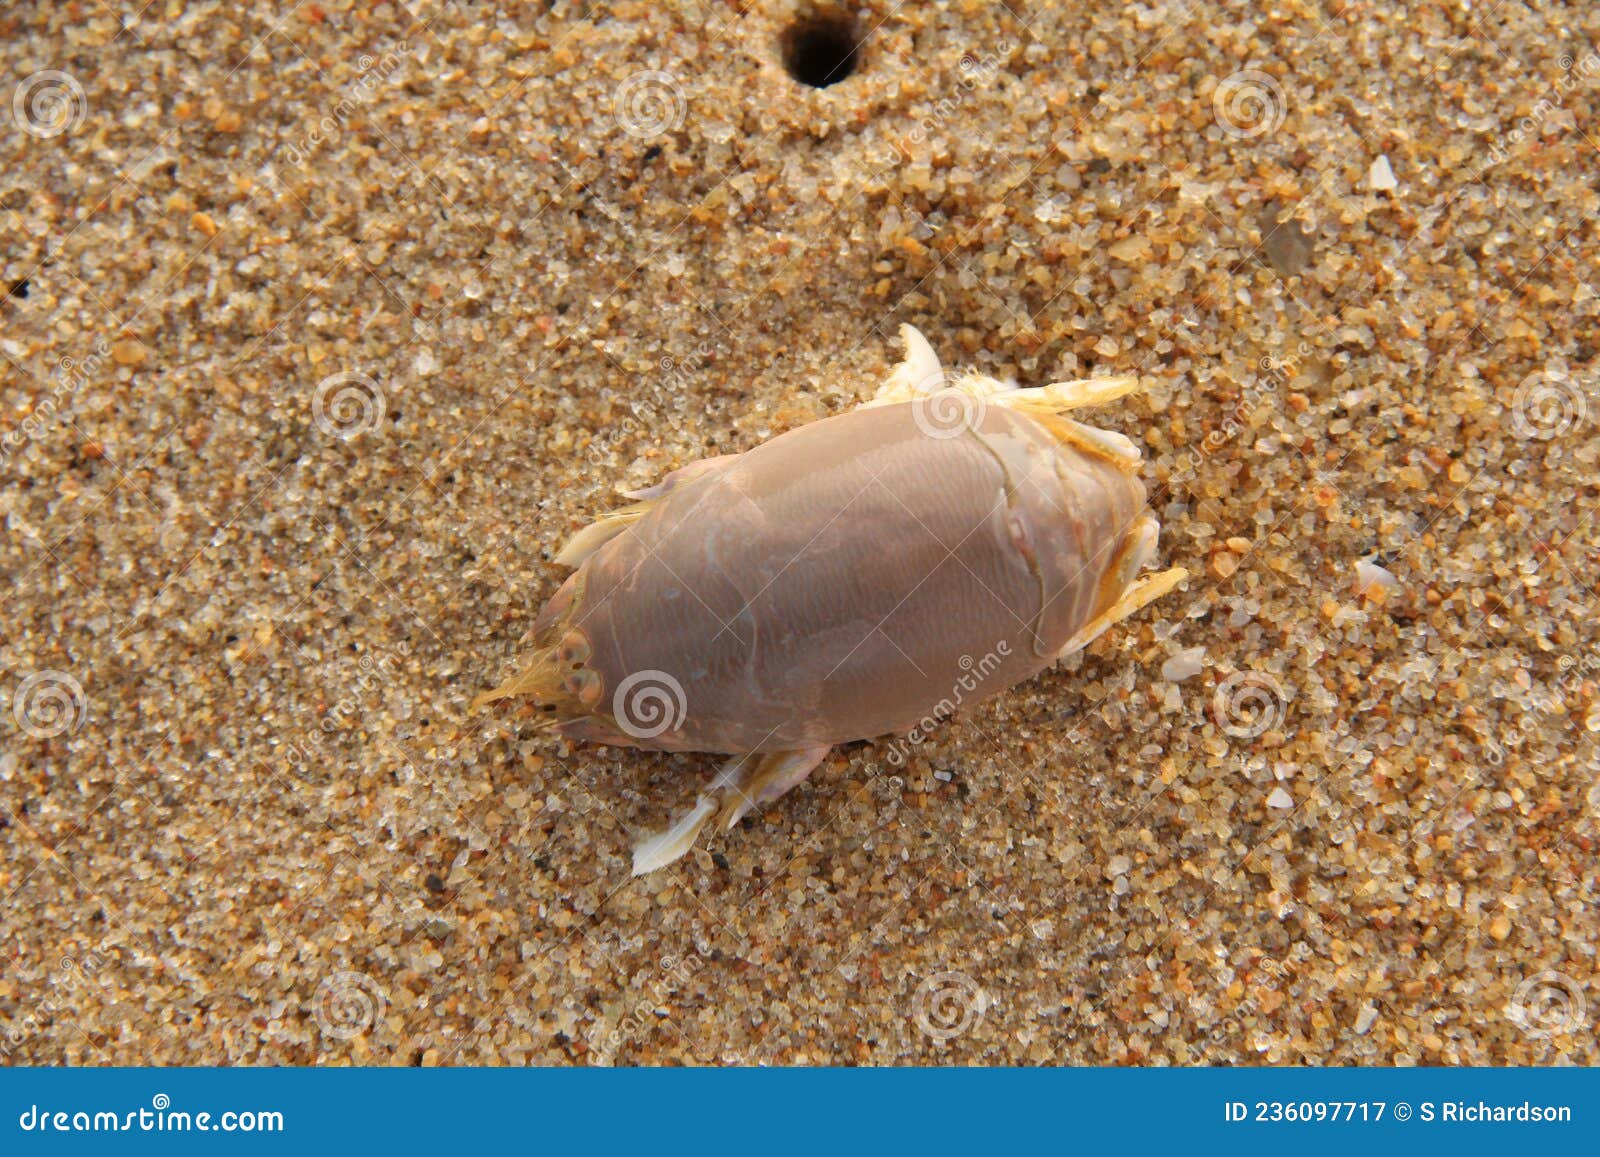 Sand crab at Muttukadu stock image. Image of small, feeding